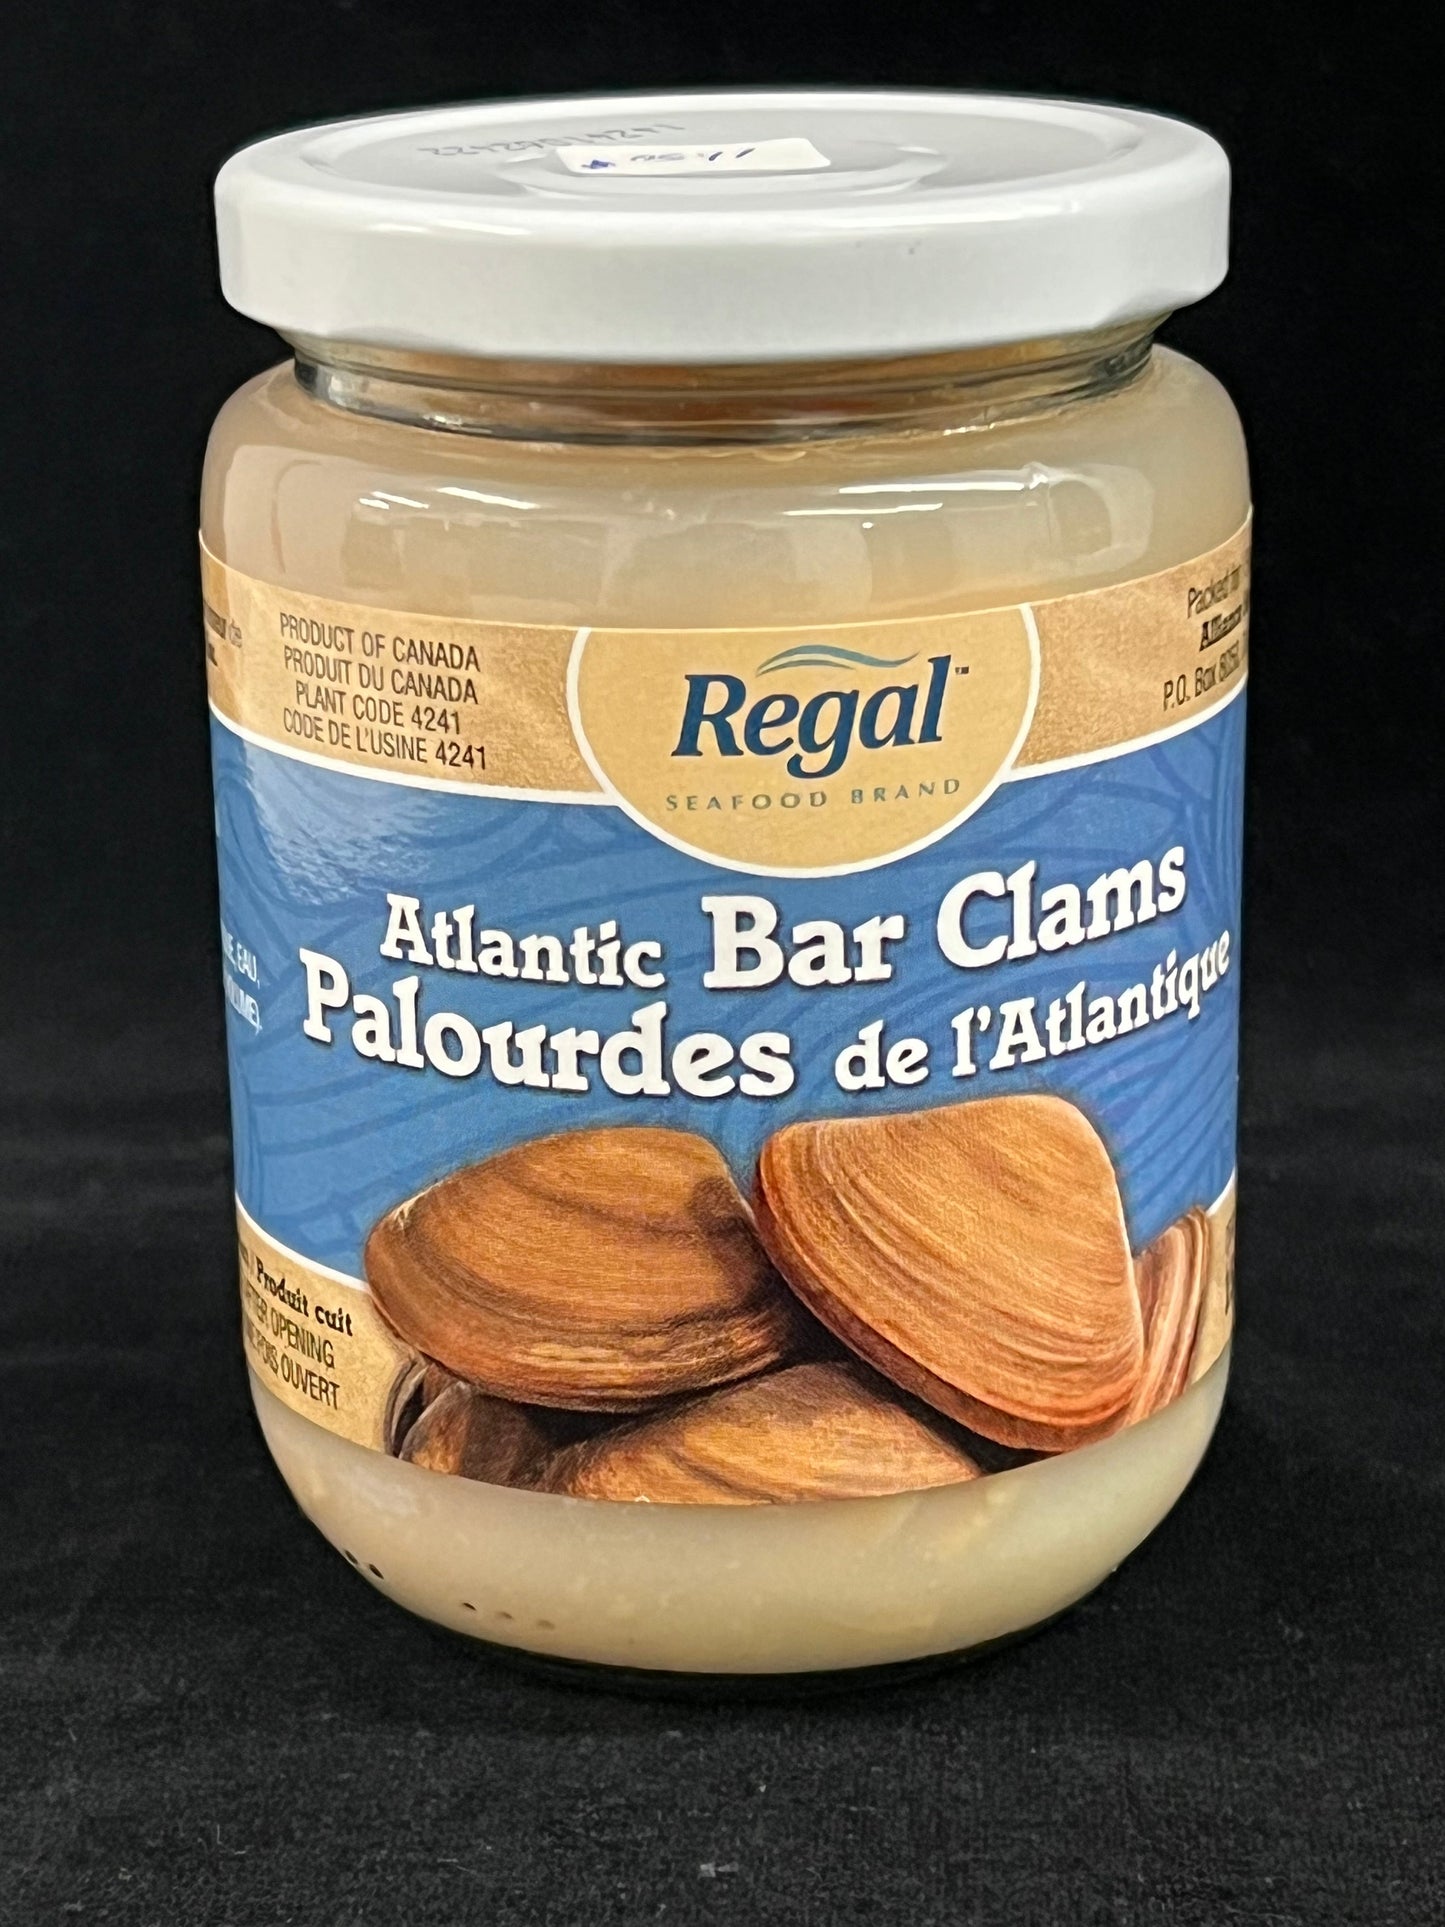 Regal Seafood Brand - Atlantic Clams / Artic Bar Clams - Box of 12